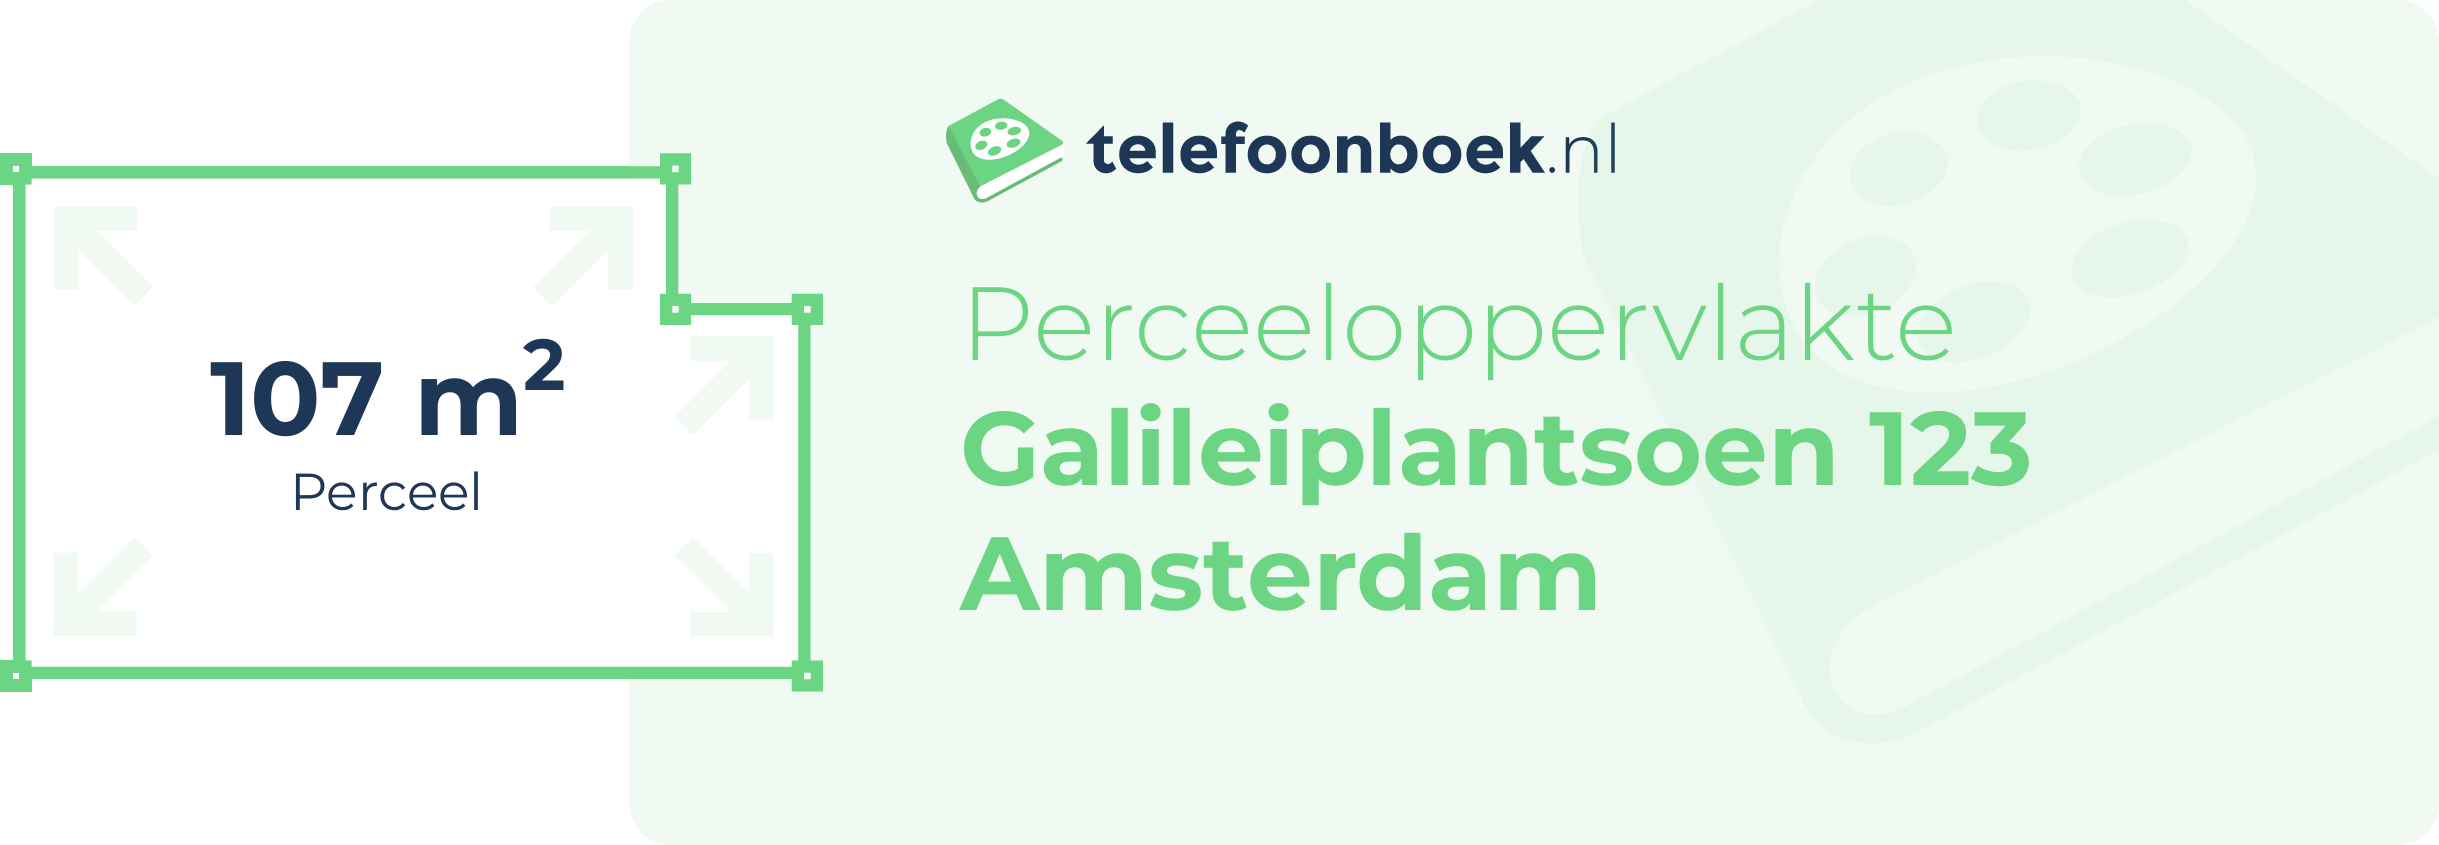 Perceeloppervlakte Galileiplantsoen 123 Amsterdam